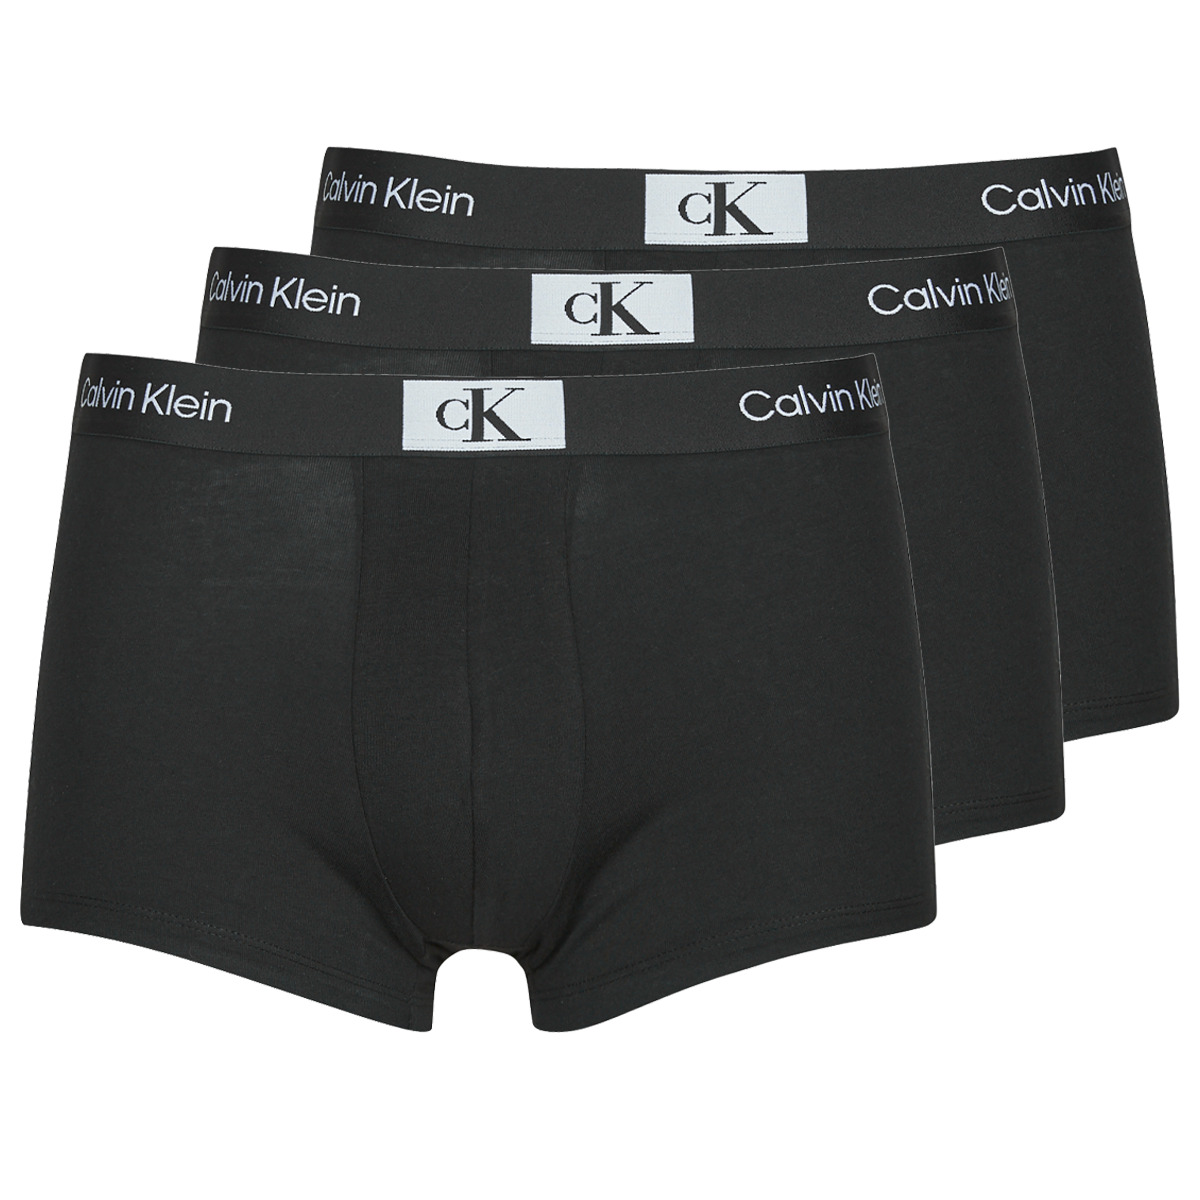 pairs of men s high socks calvin klein 100003124 grey combo Boxer Calvin Klein Jeans TRUNK 3PK X3 Preto / Preto / Preto